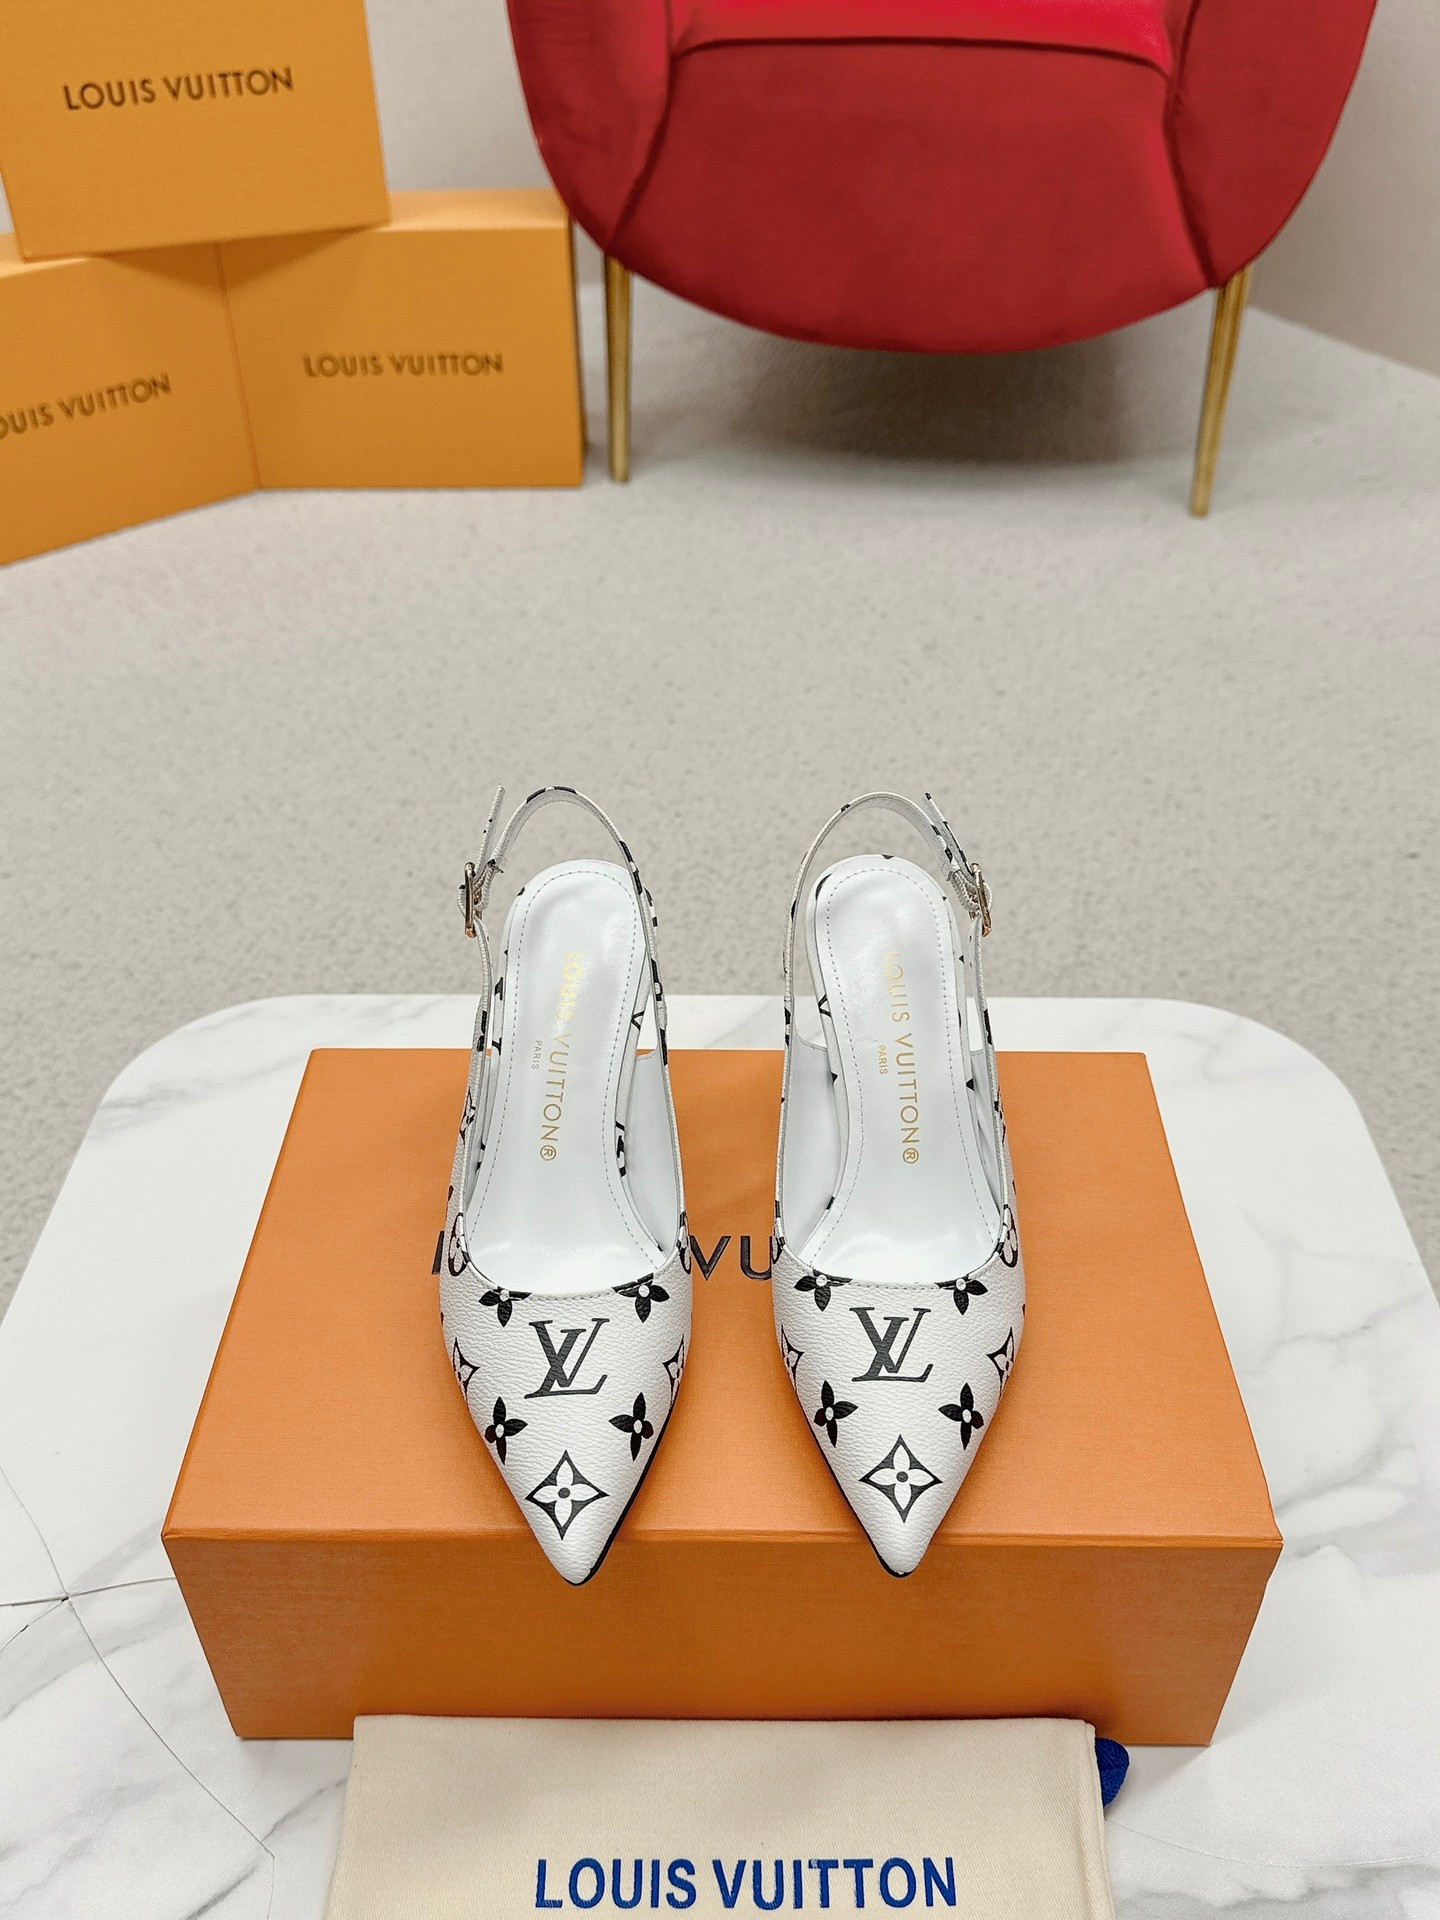 Online aus China
 Louis Vuitton Speichern
 Schuhe Sandalen Rindsleder Echtleder Frühlingskollektion Vintage